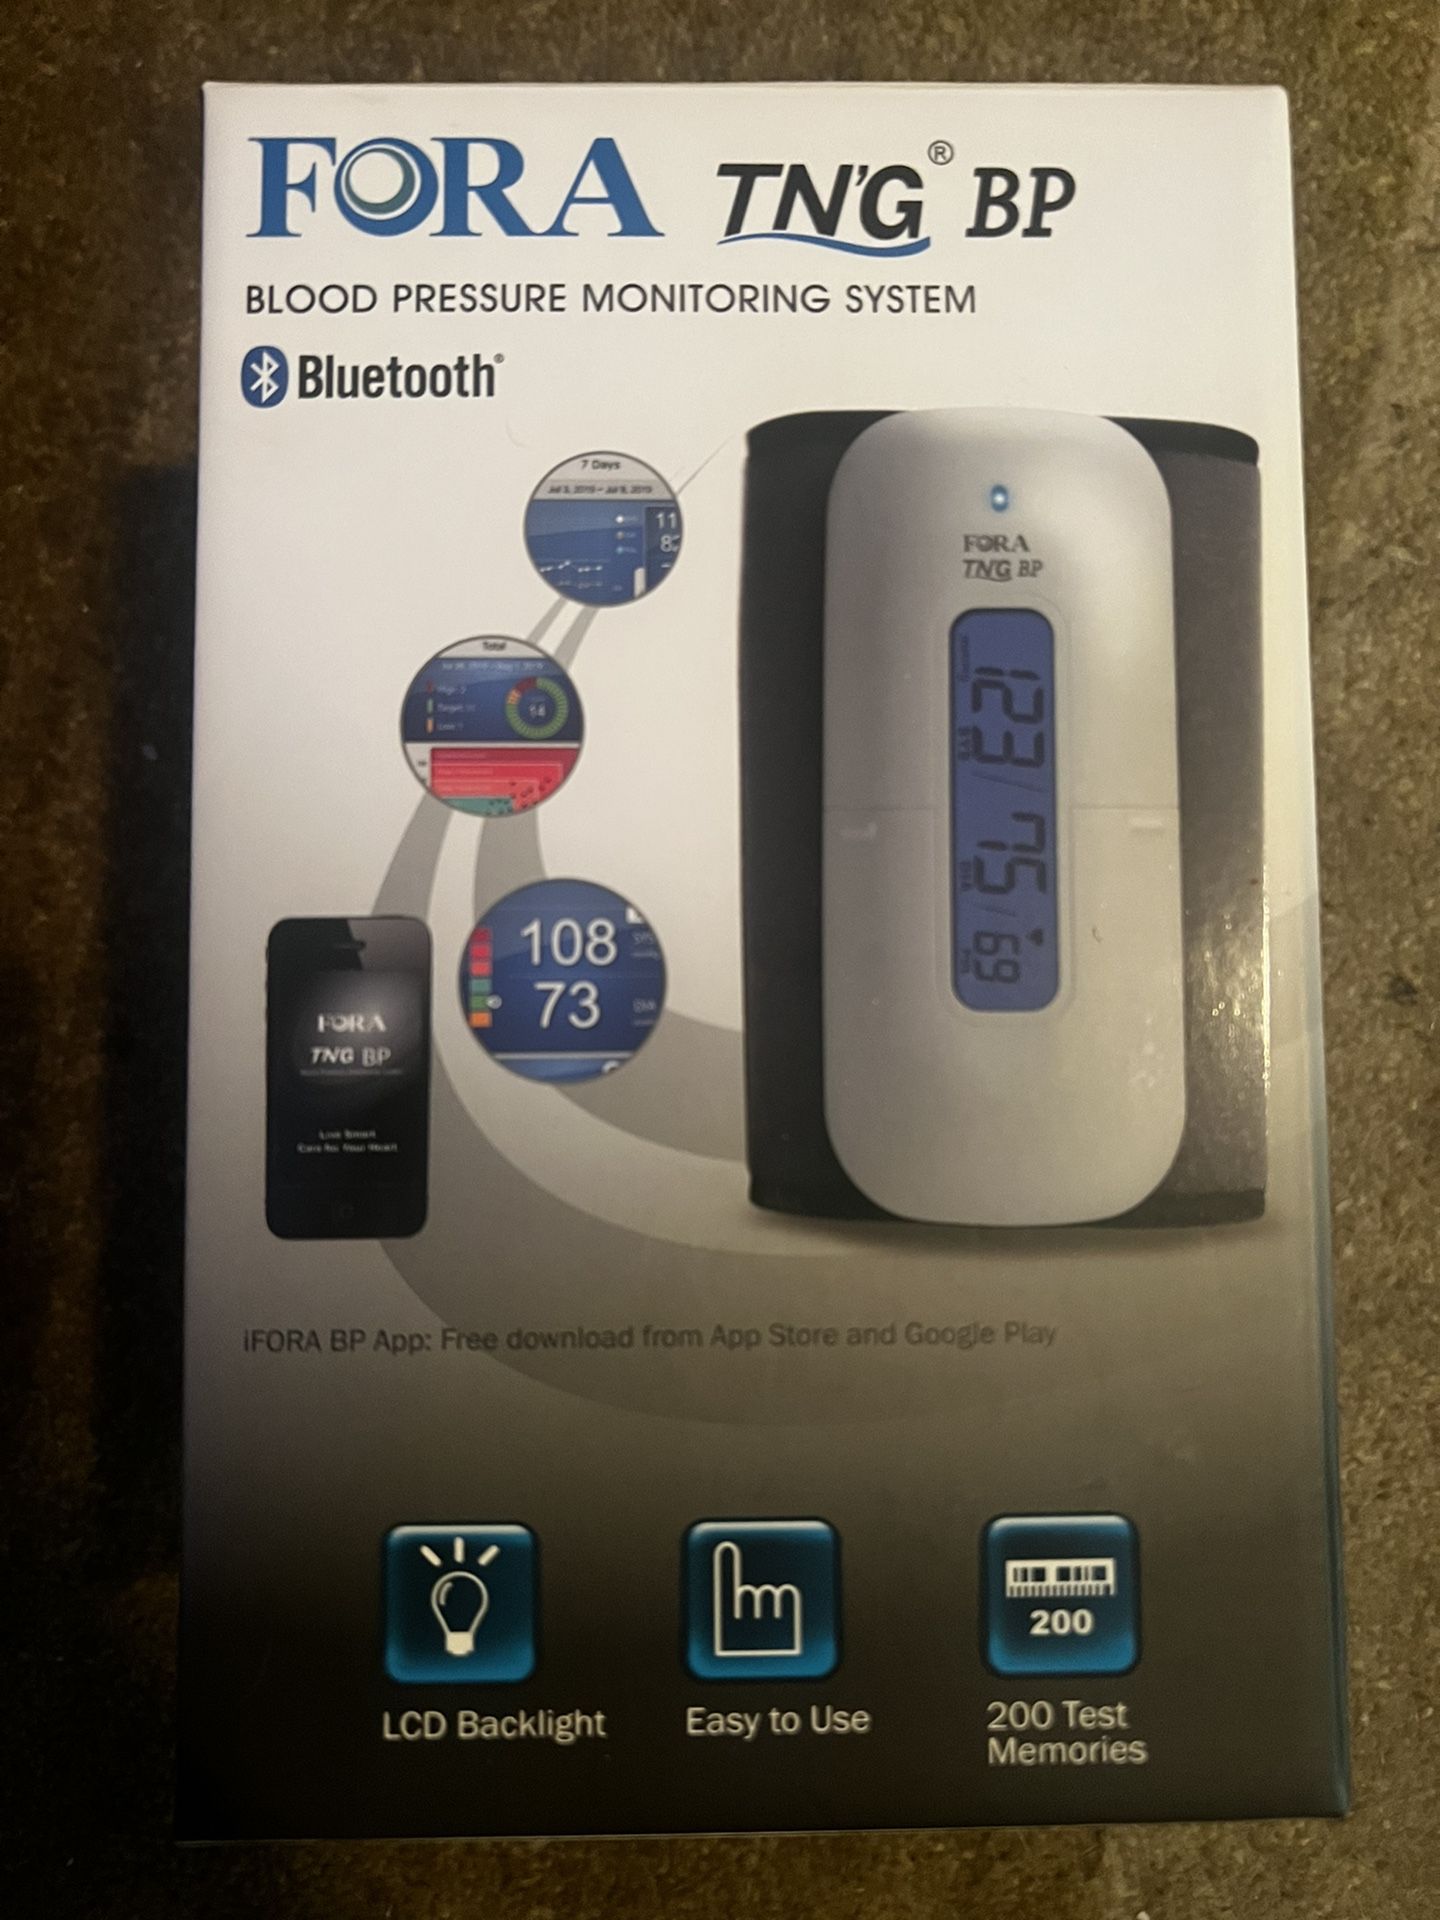 FORA P20b Arm Type Talking Bluetooth Blood Pressure Monitor, (Cuff Range  9.4-16.9/24~43cm)